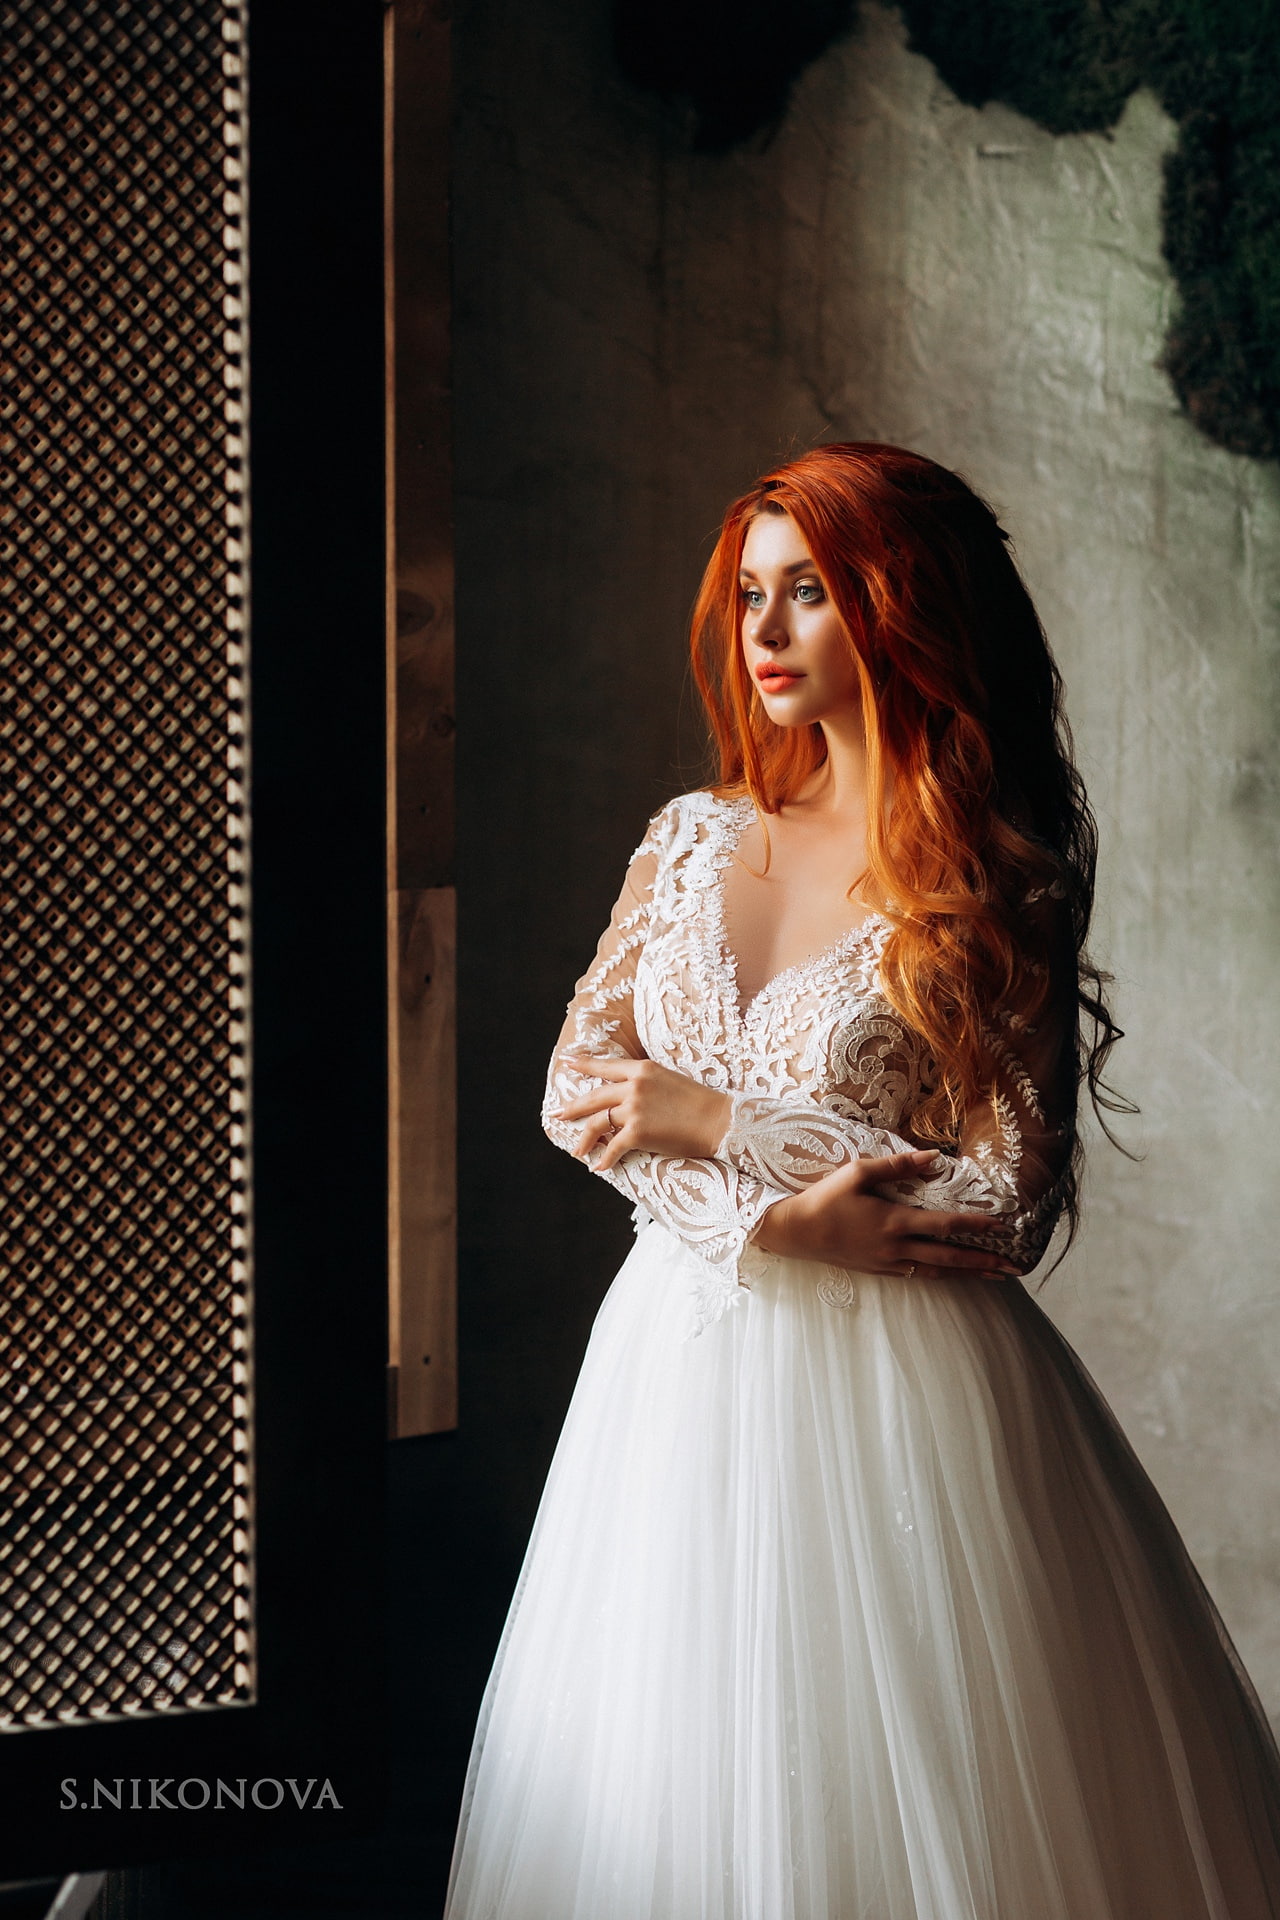 Dana Bounty, women, model, redhead, portrait, wedding dress